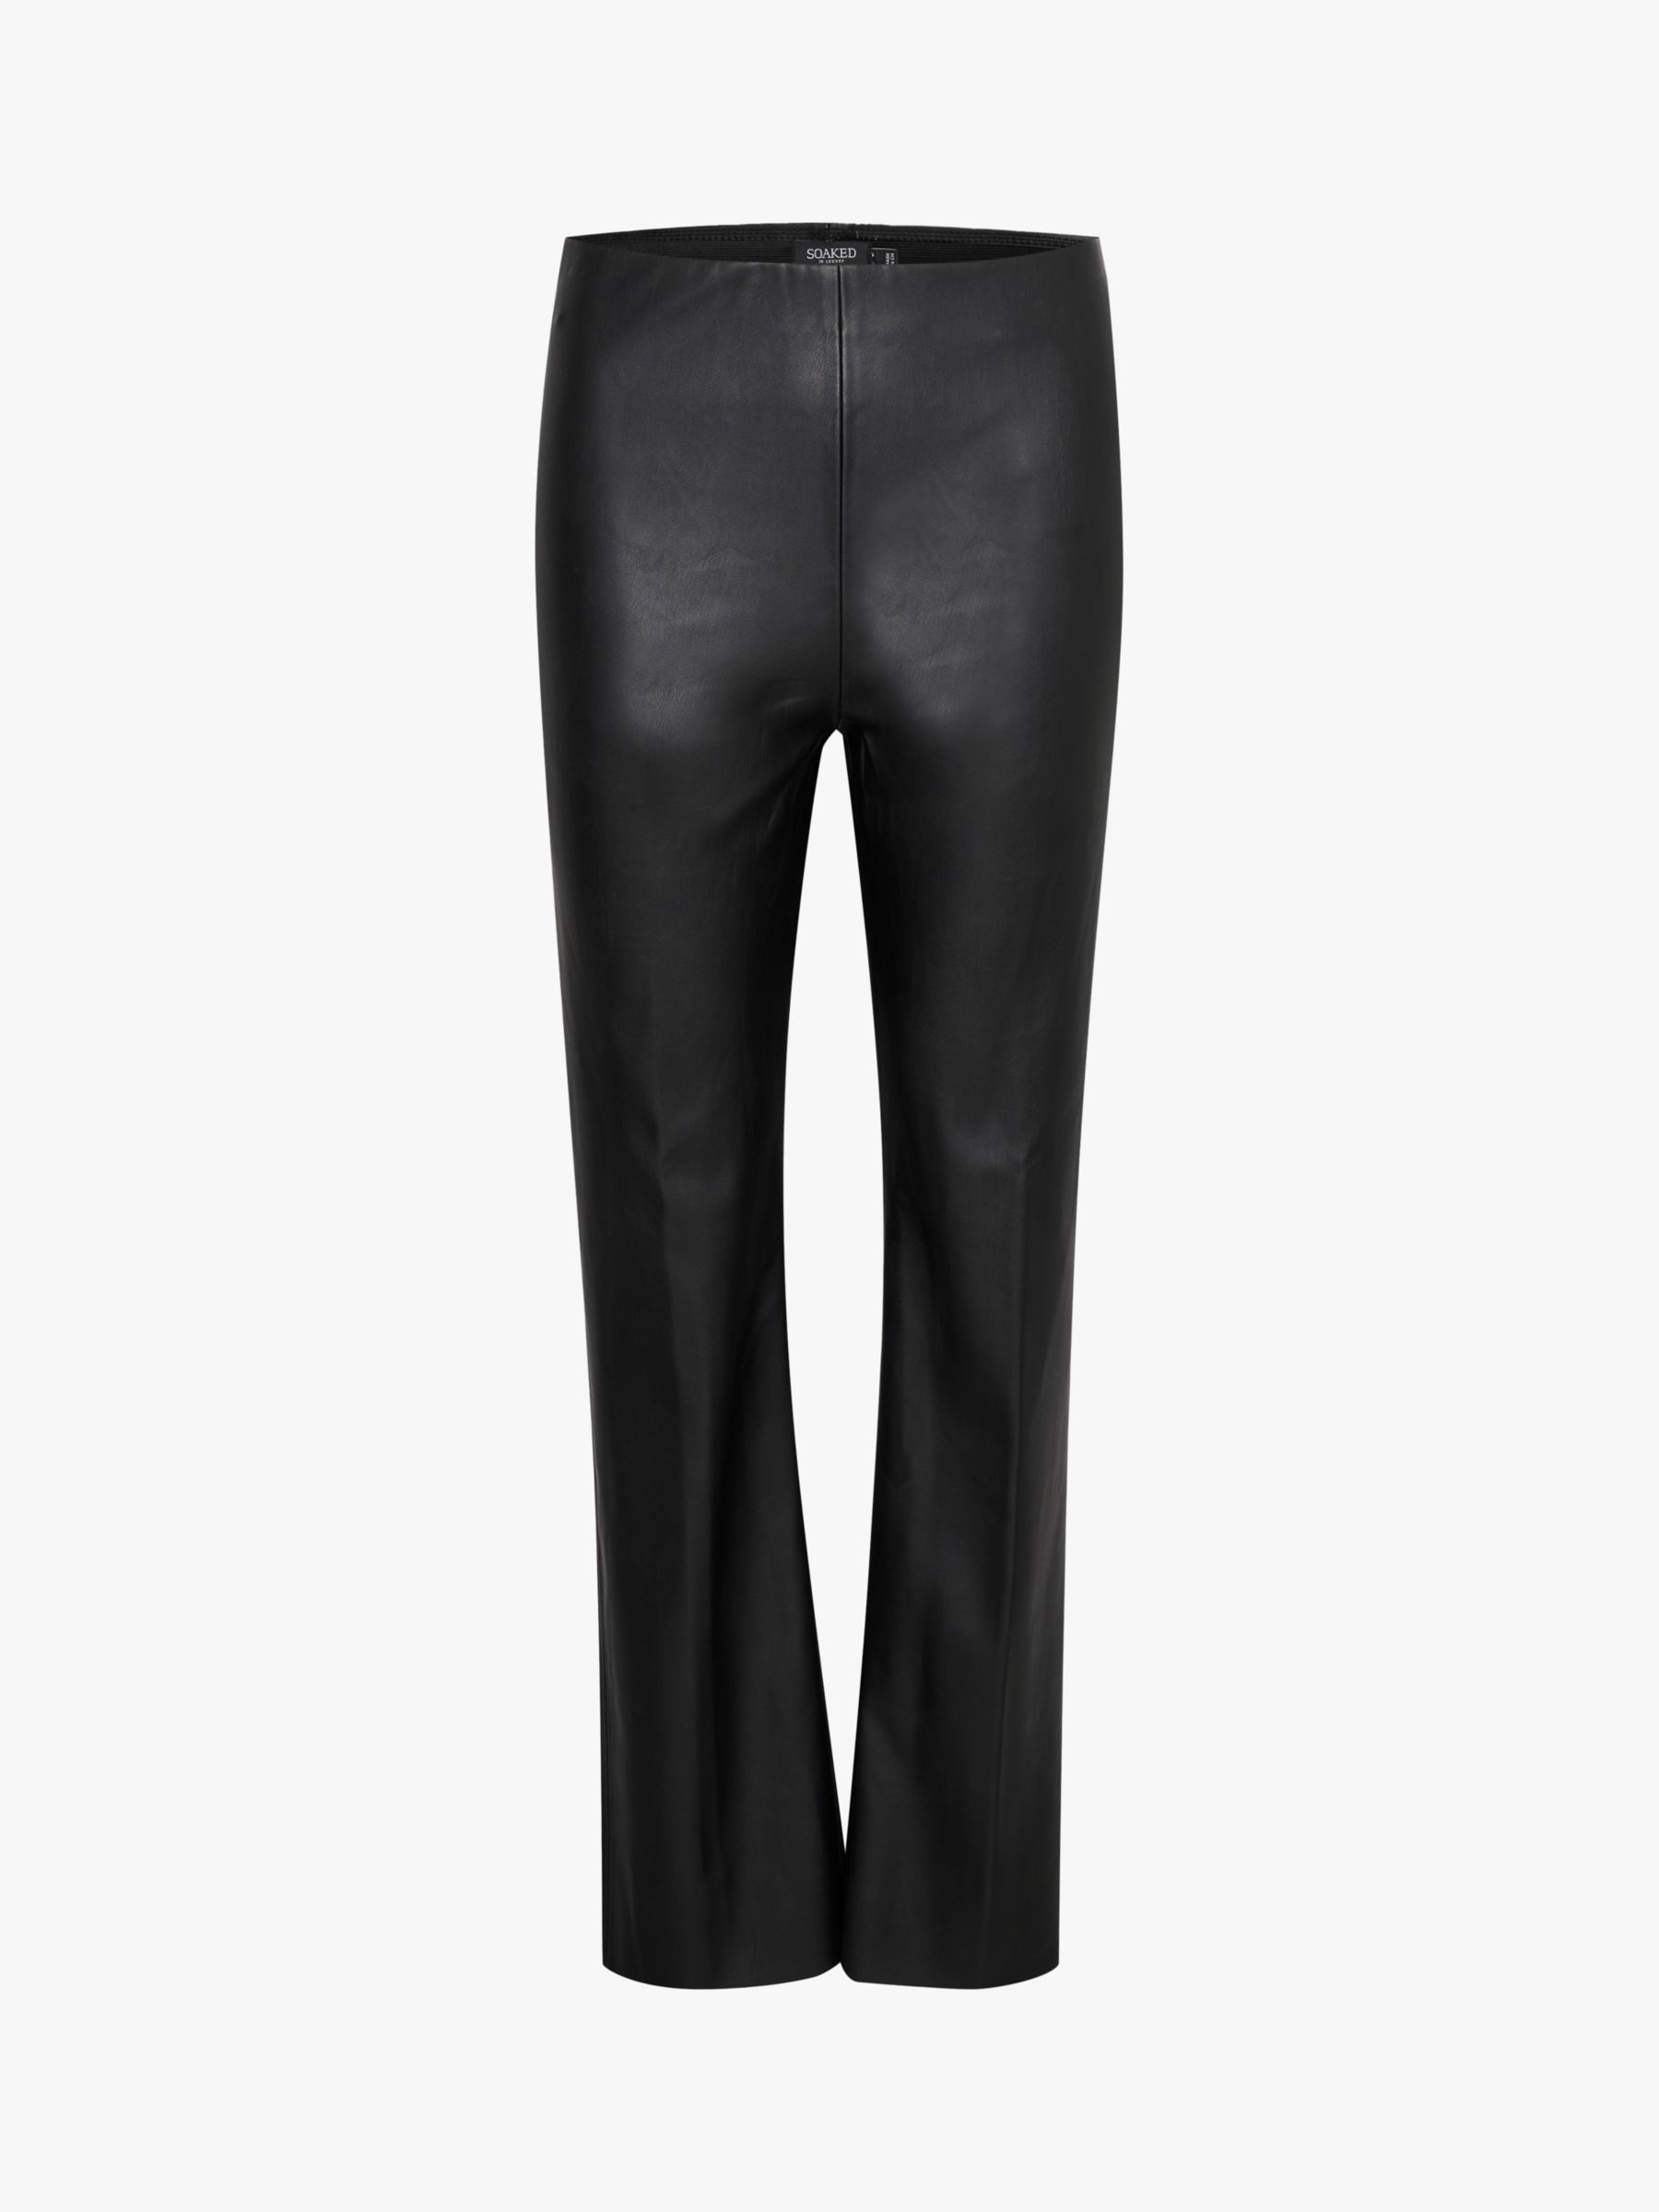 Black Faux Leather Straight Cut Pants